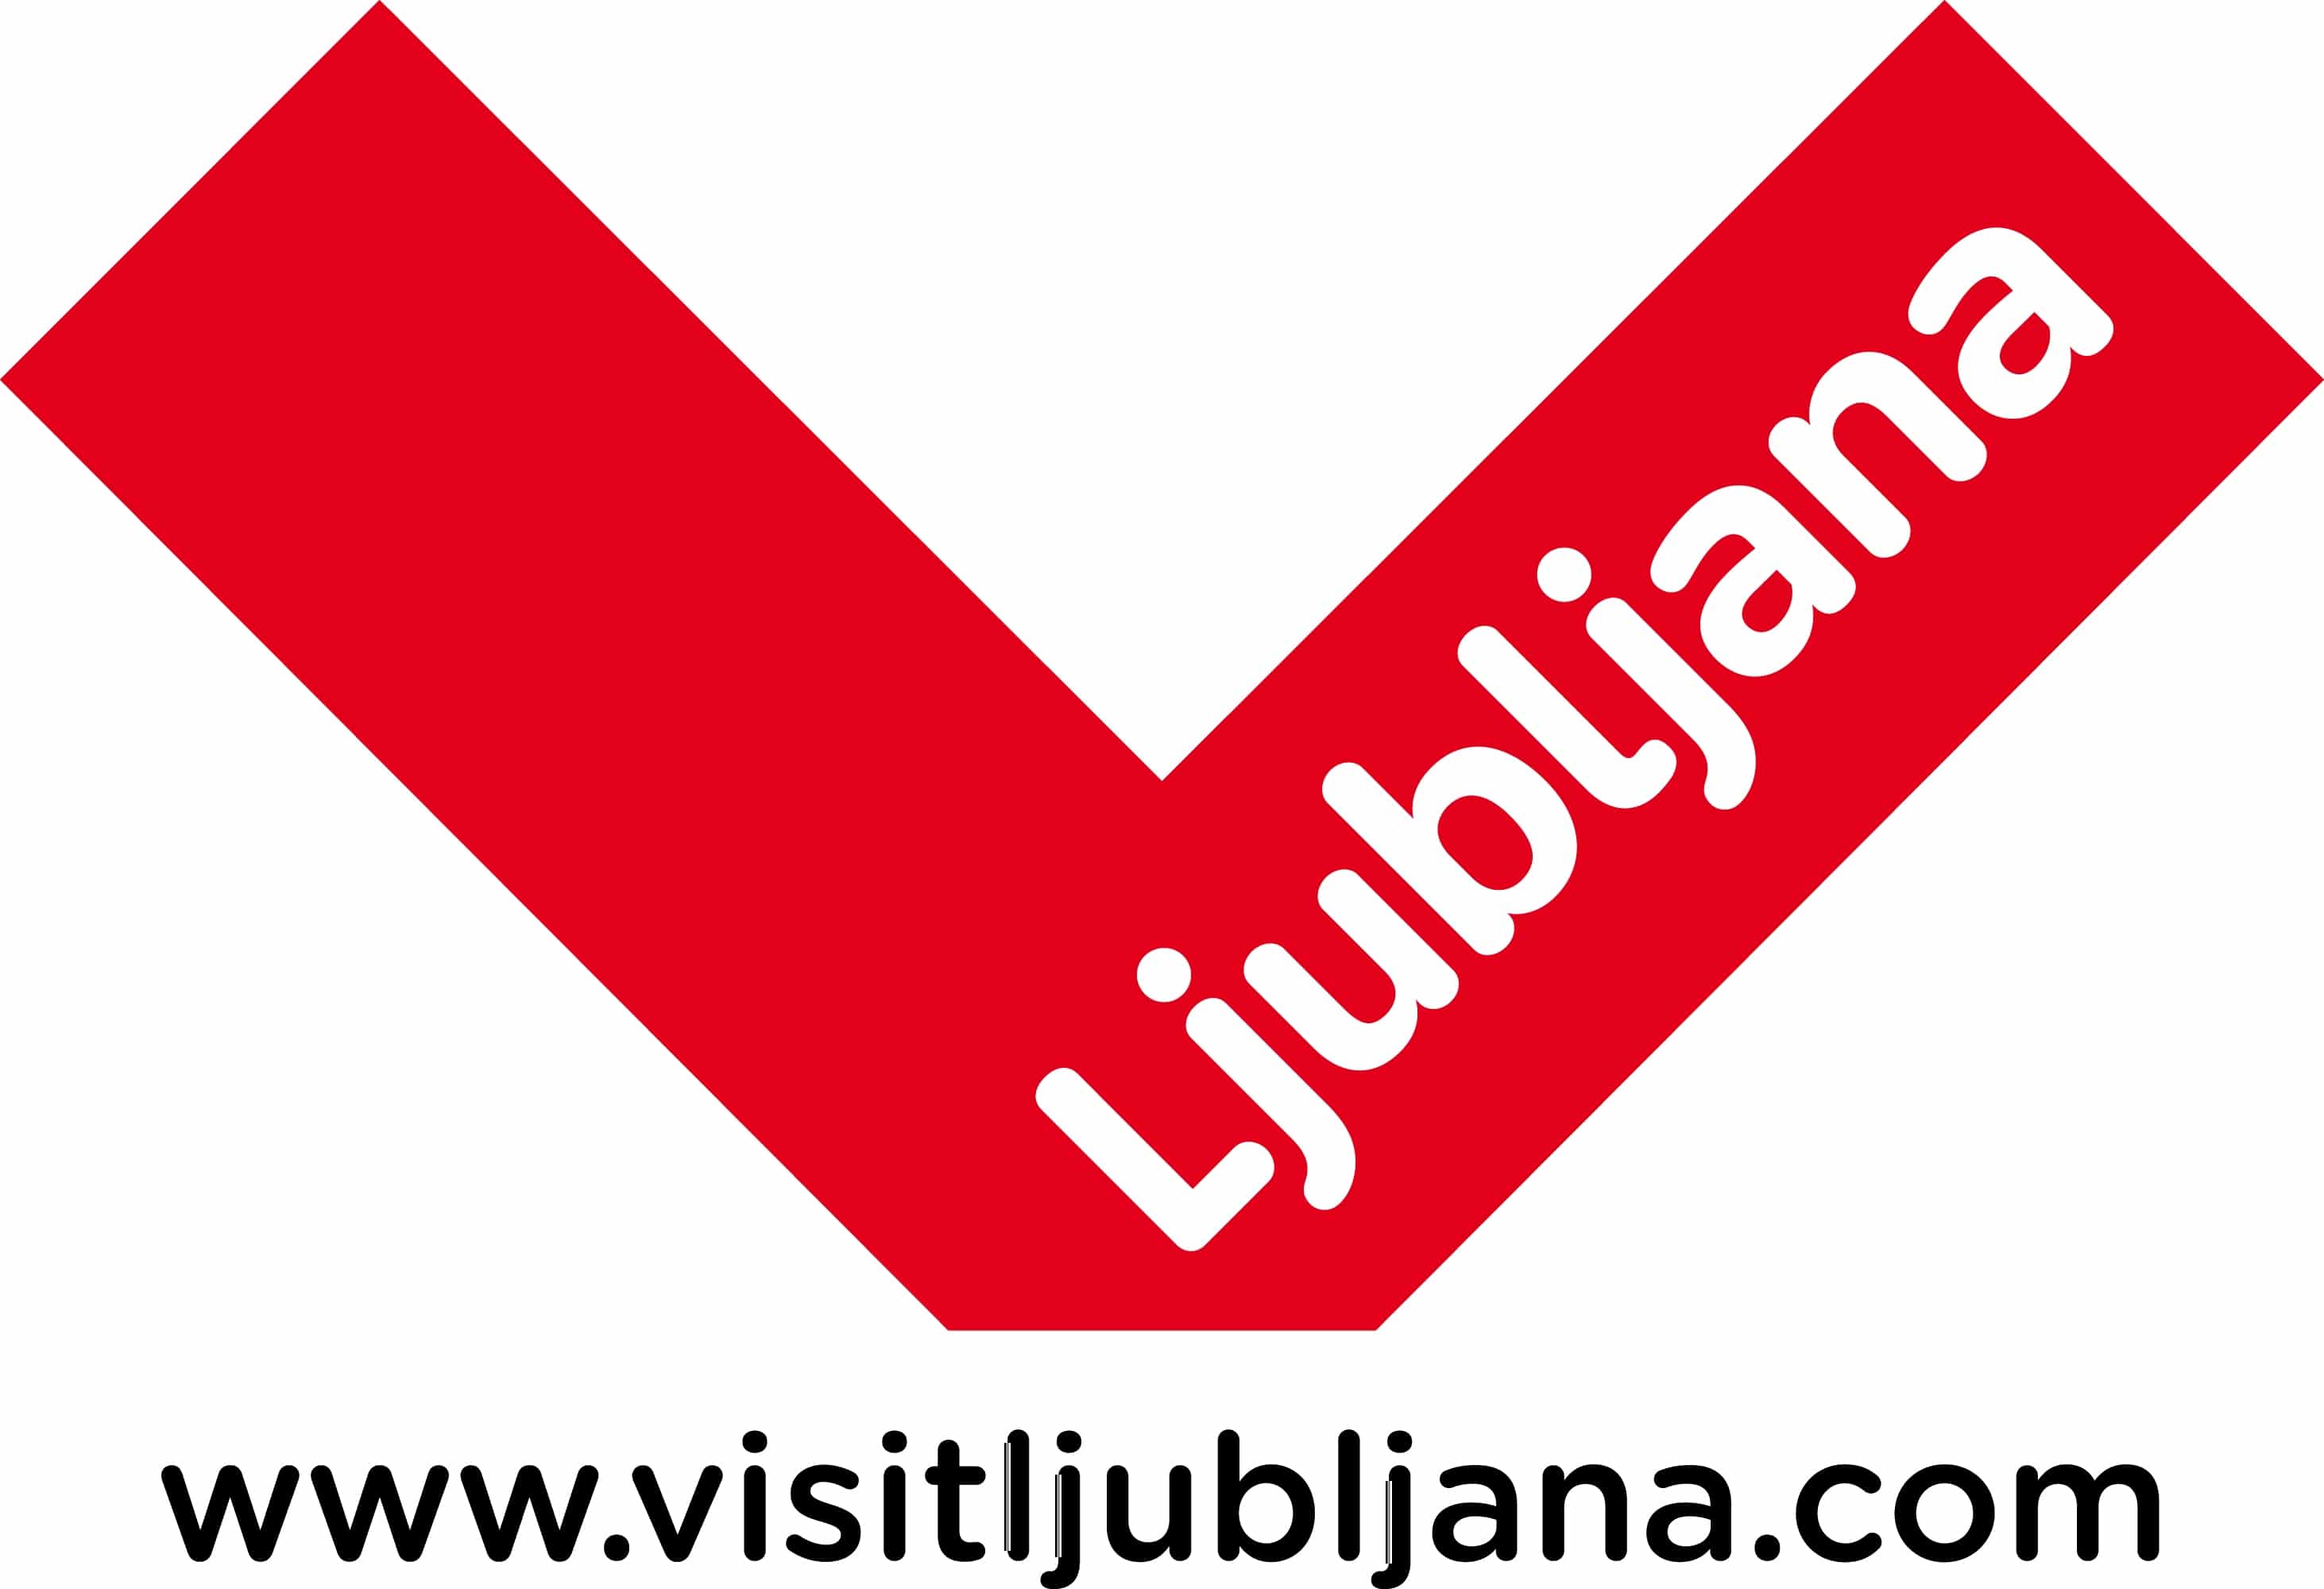 LJUBLJANA TOURISM / CONVENTION BUREAU main image